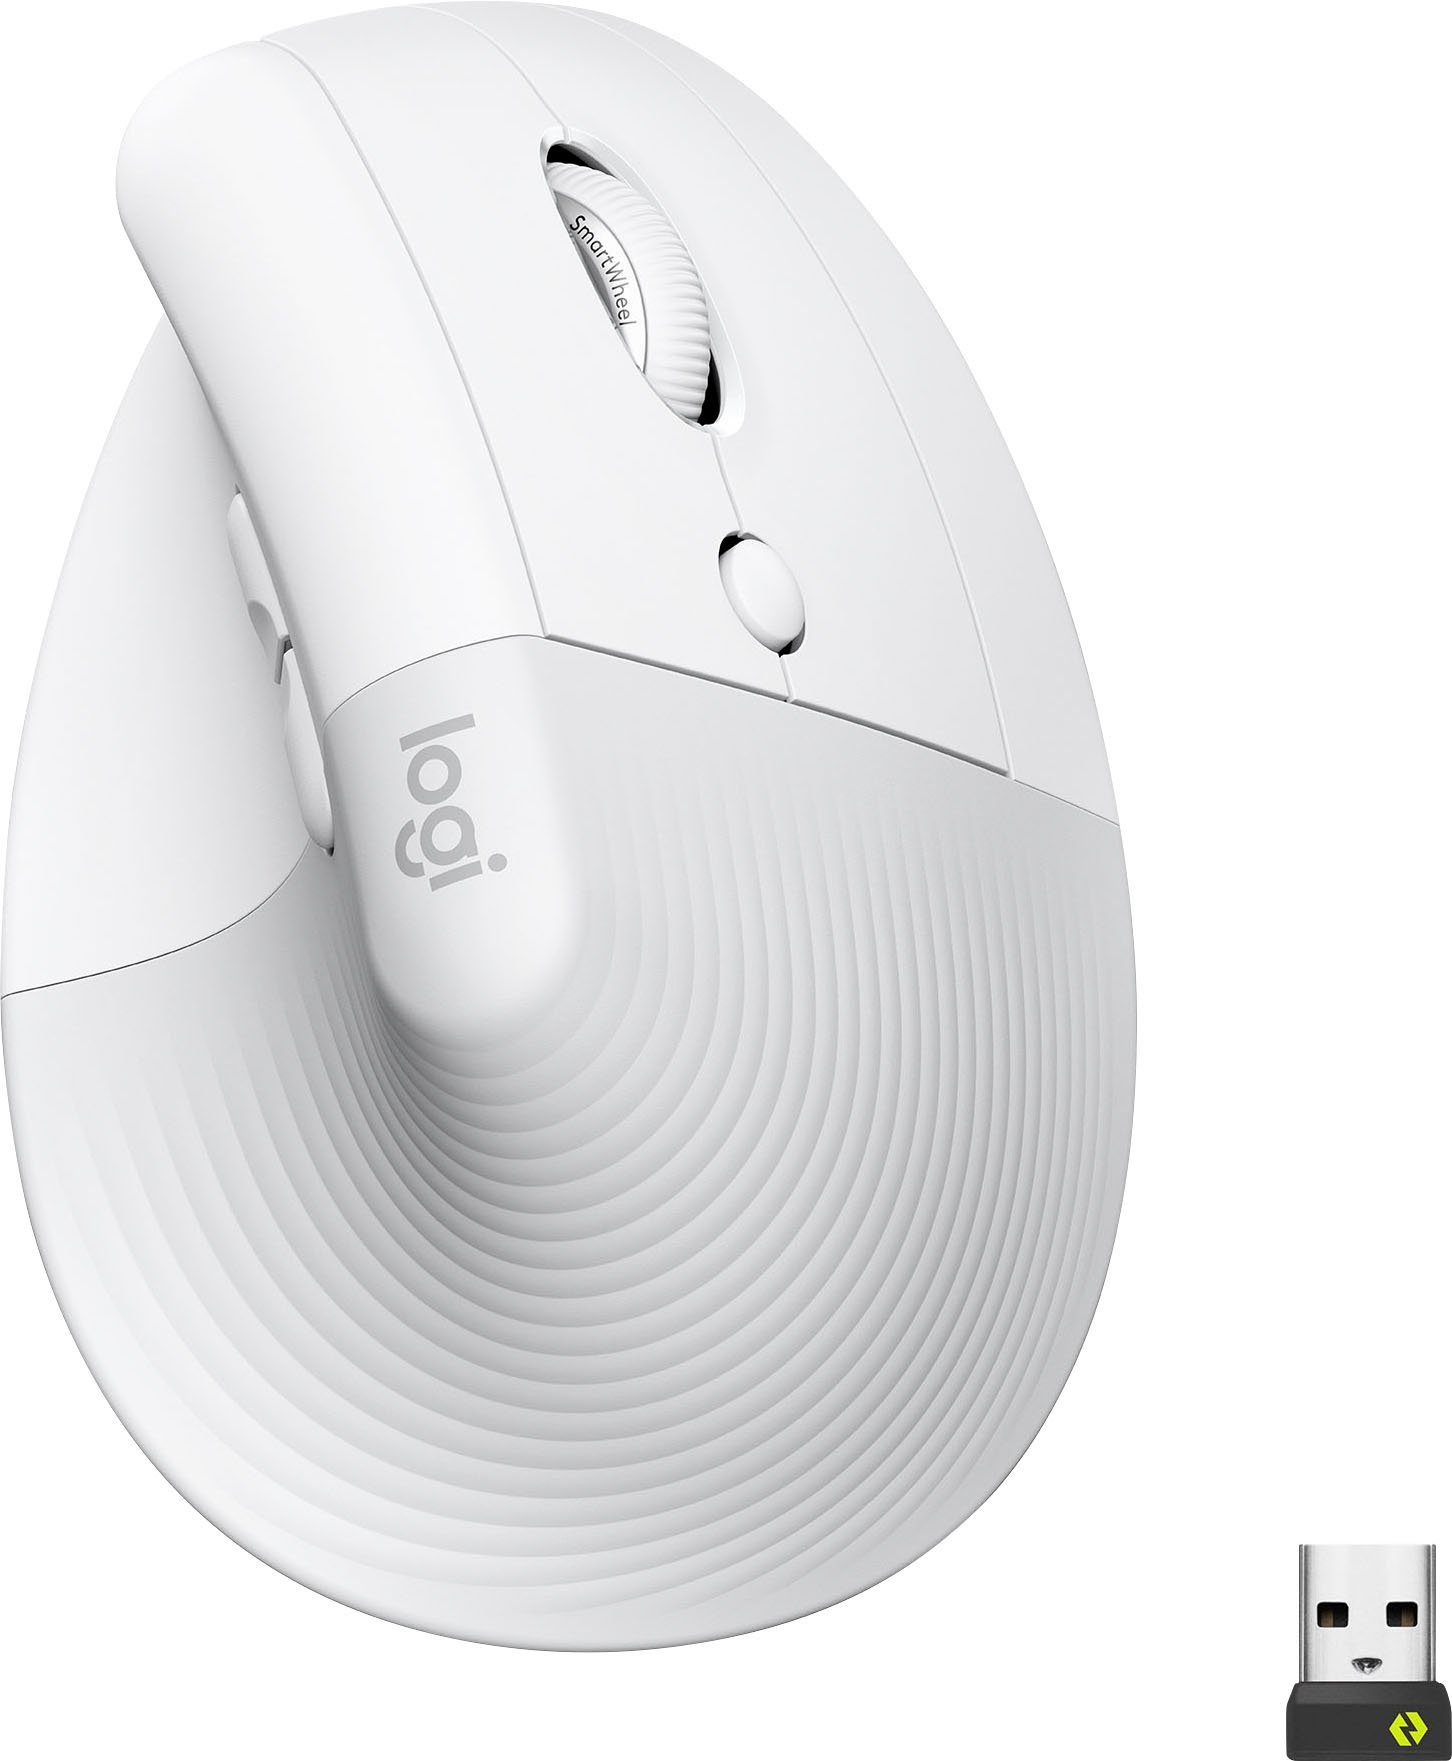 Logitech LIFT - OFF-WHITE/PALE GREY ergonomische Maus (Bluetooth)